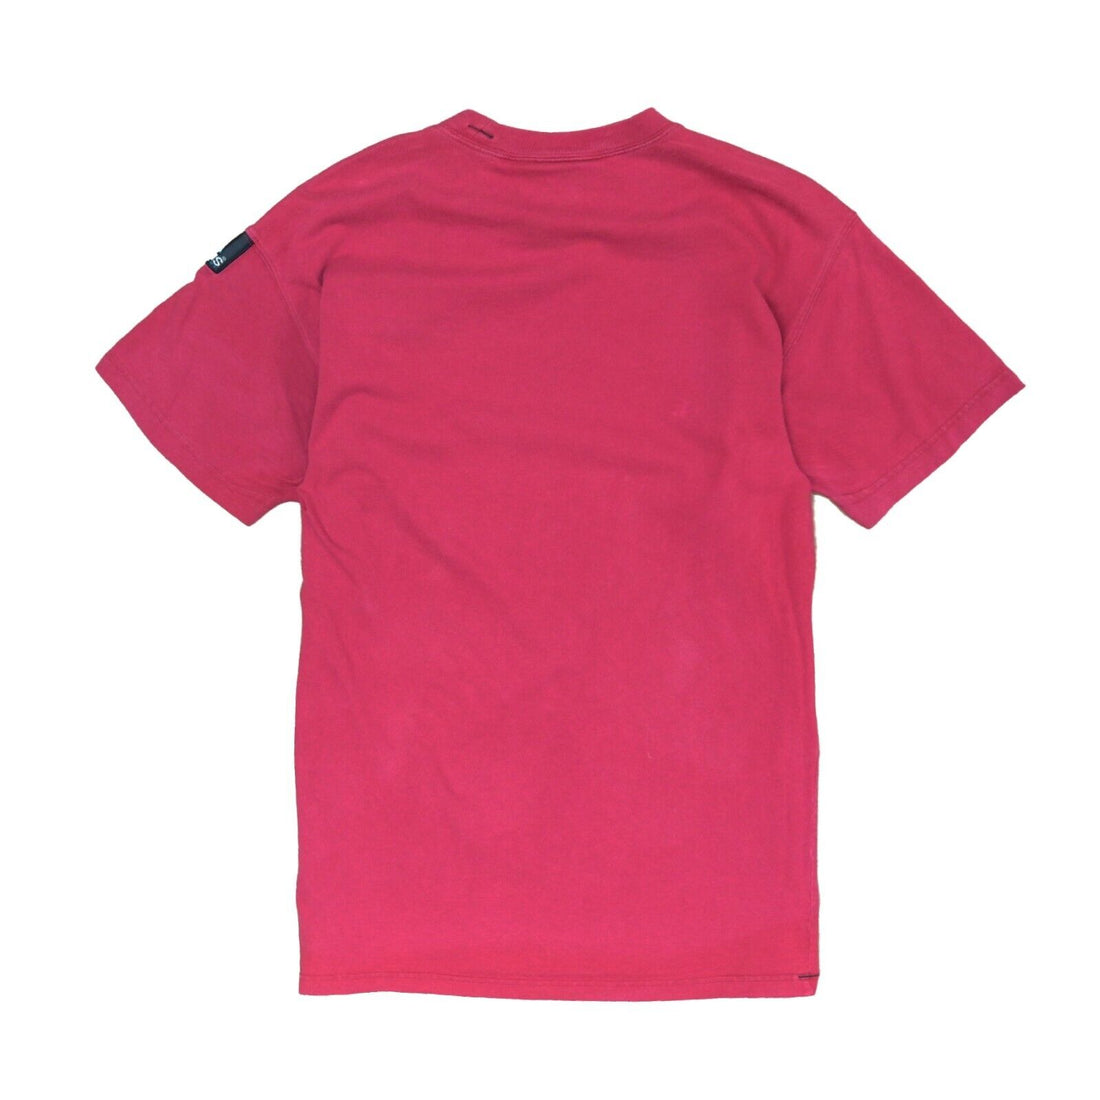 Vintage Adidas Equipment T-Shirt Size Medium Red 90s